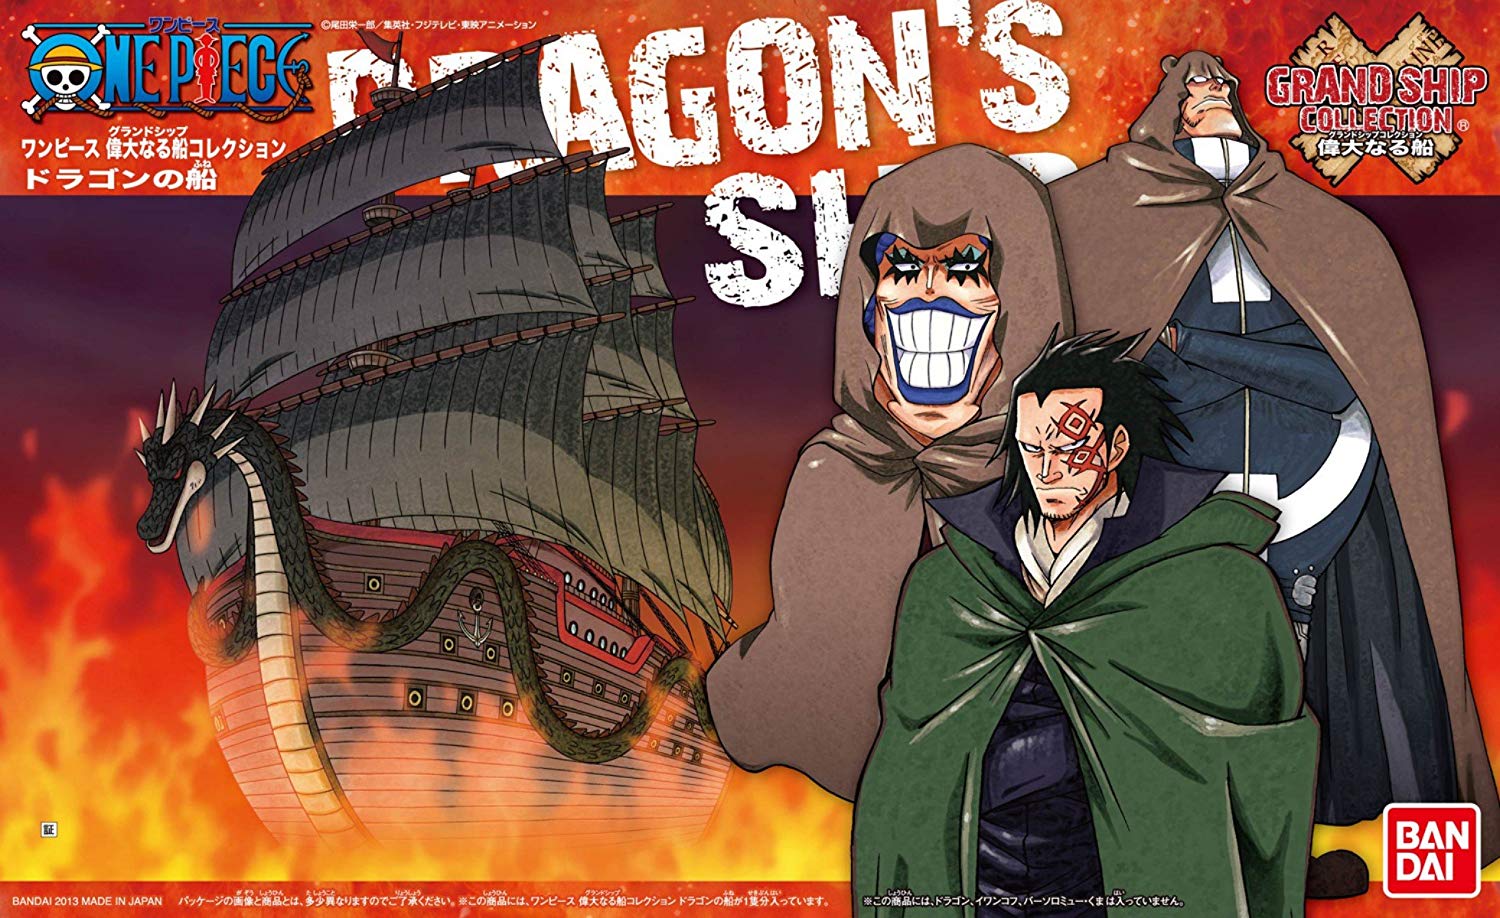 Dragon's Ship Grand Ship Collection 09 - One Piece Bandai | Glacier Hobbies